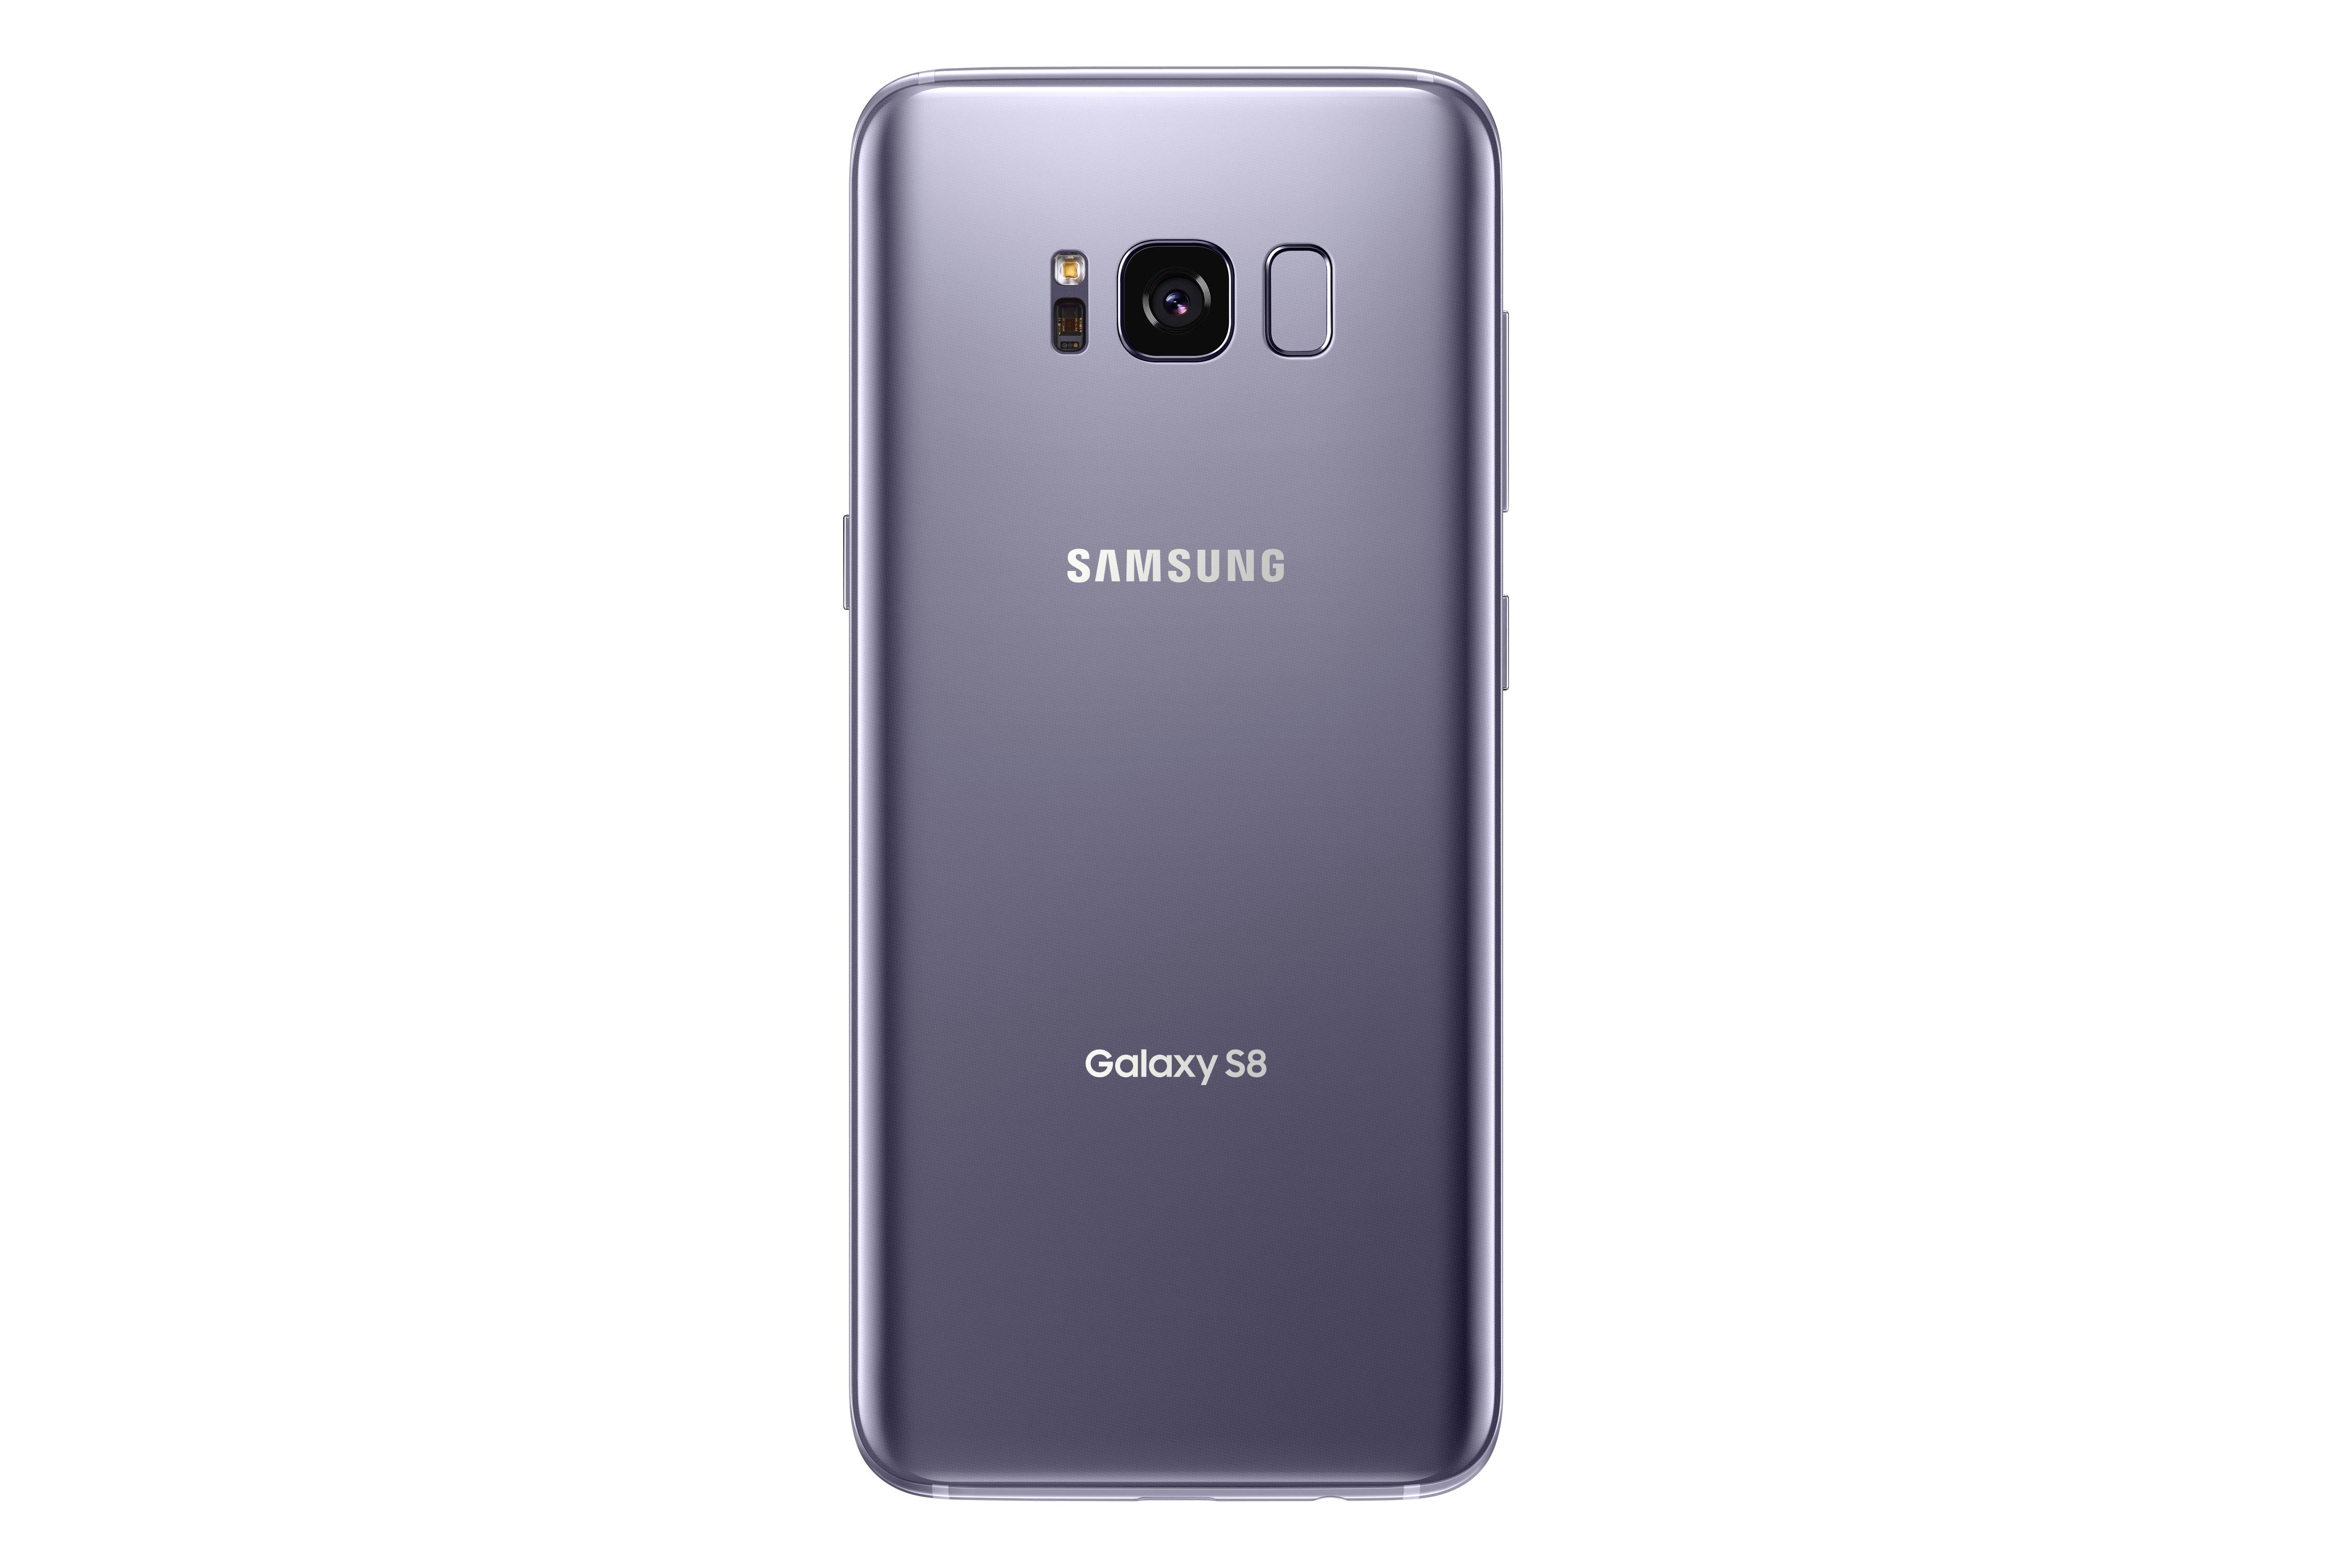 Samsung SM-G950UZVASPR 64GB Orchid Gray Galaxy S8 Smartphone (Sprint) - image 5 of 6